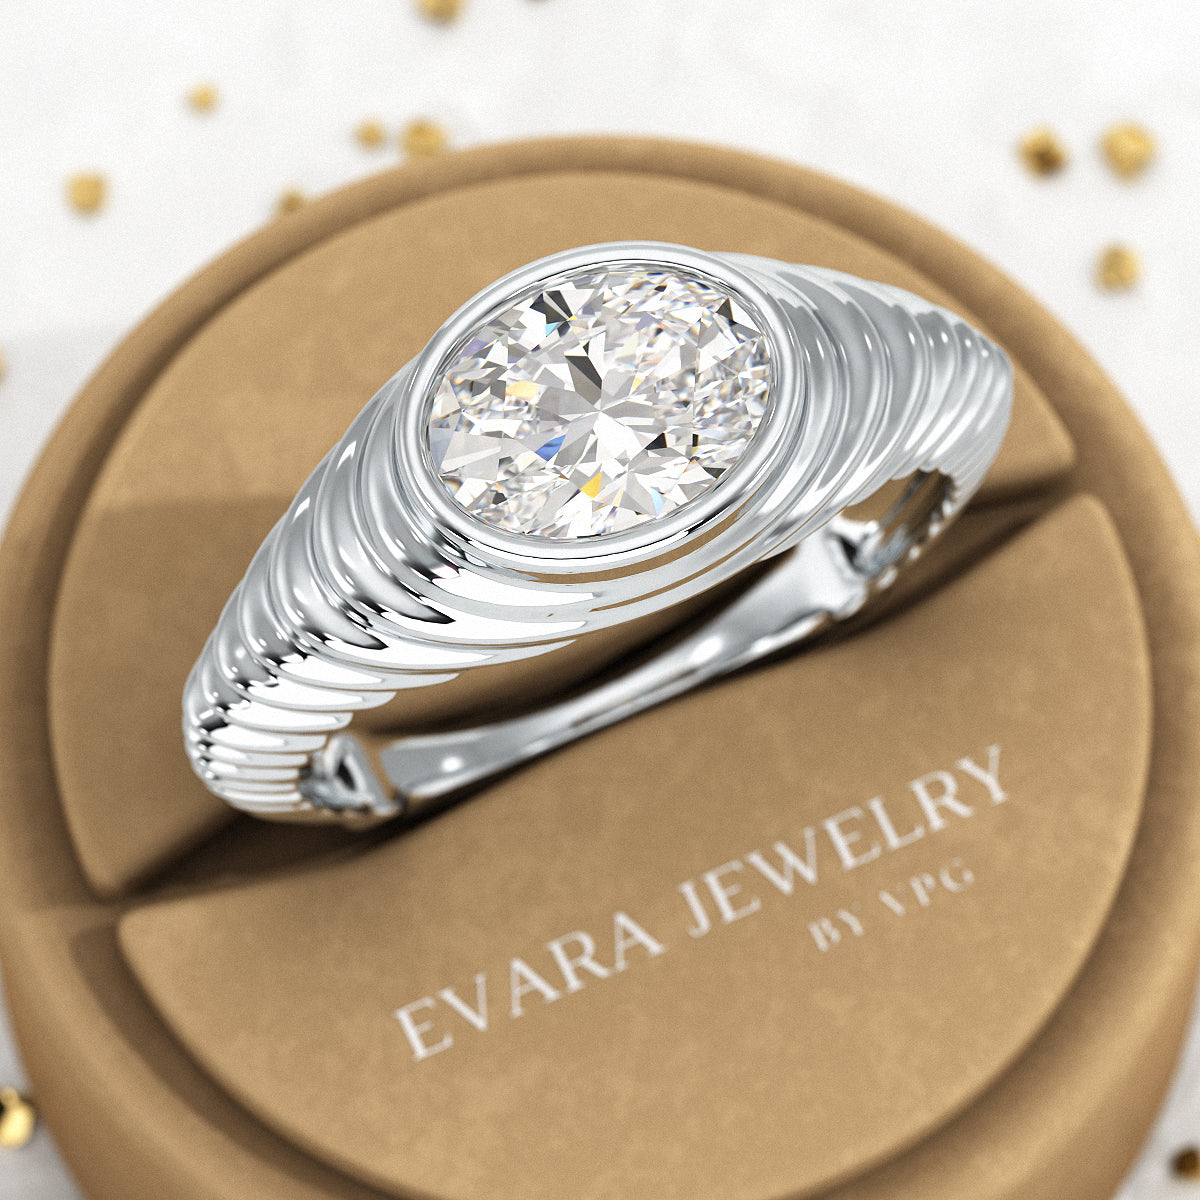 9k Yellow Gold Ring Women | Vistoso Engagement Rings | 9k Gold Engagement  Ring - Gold - Aliexpress